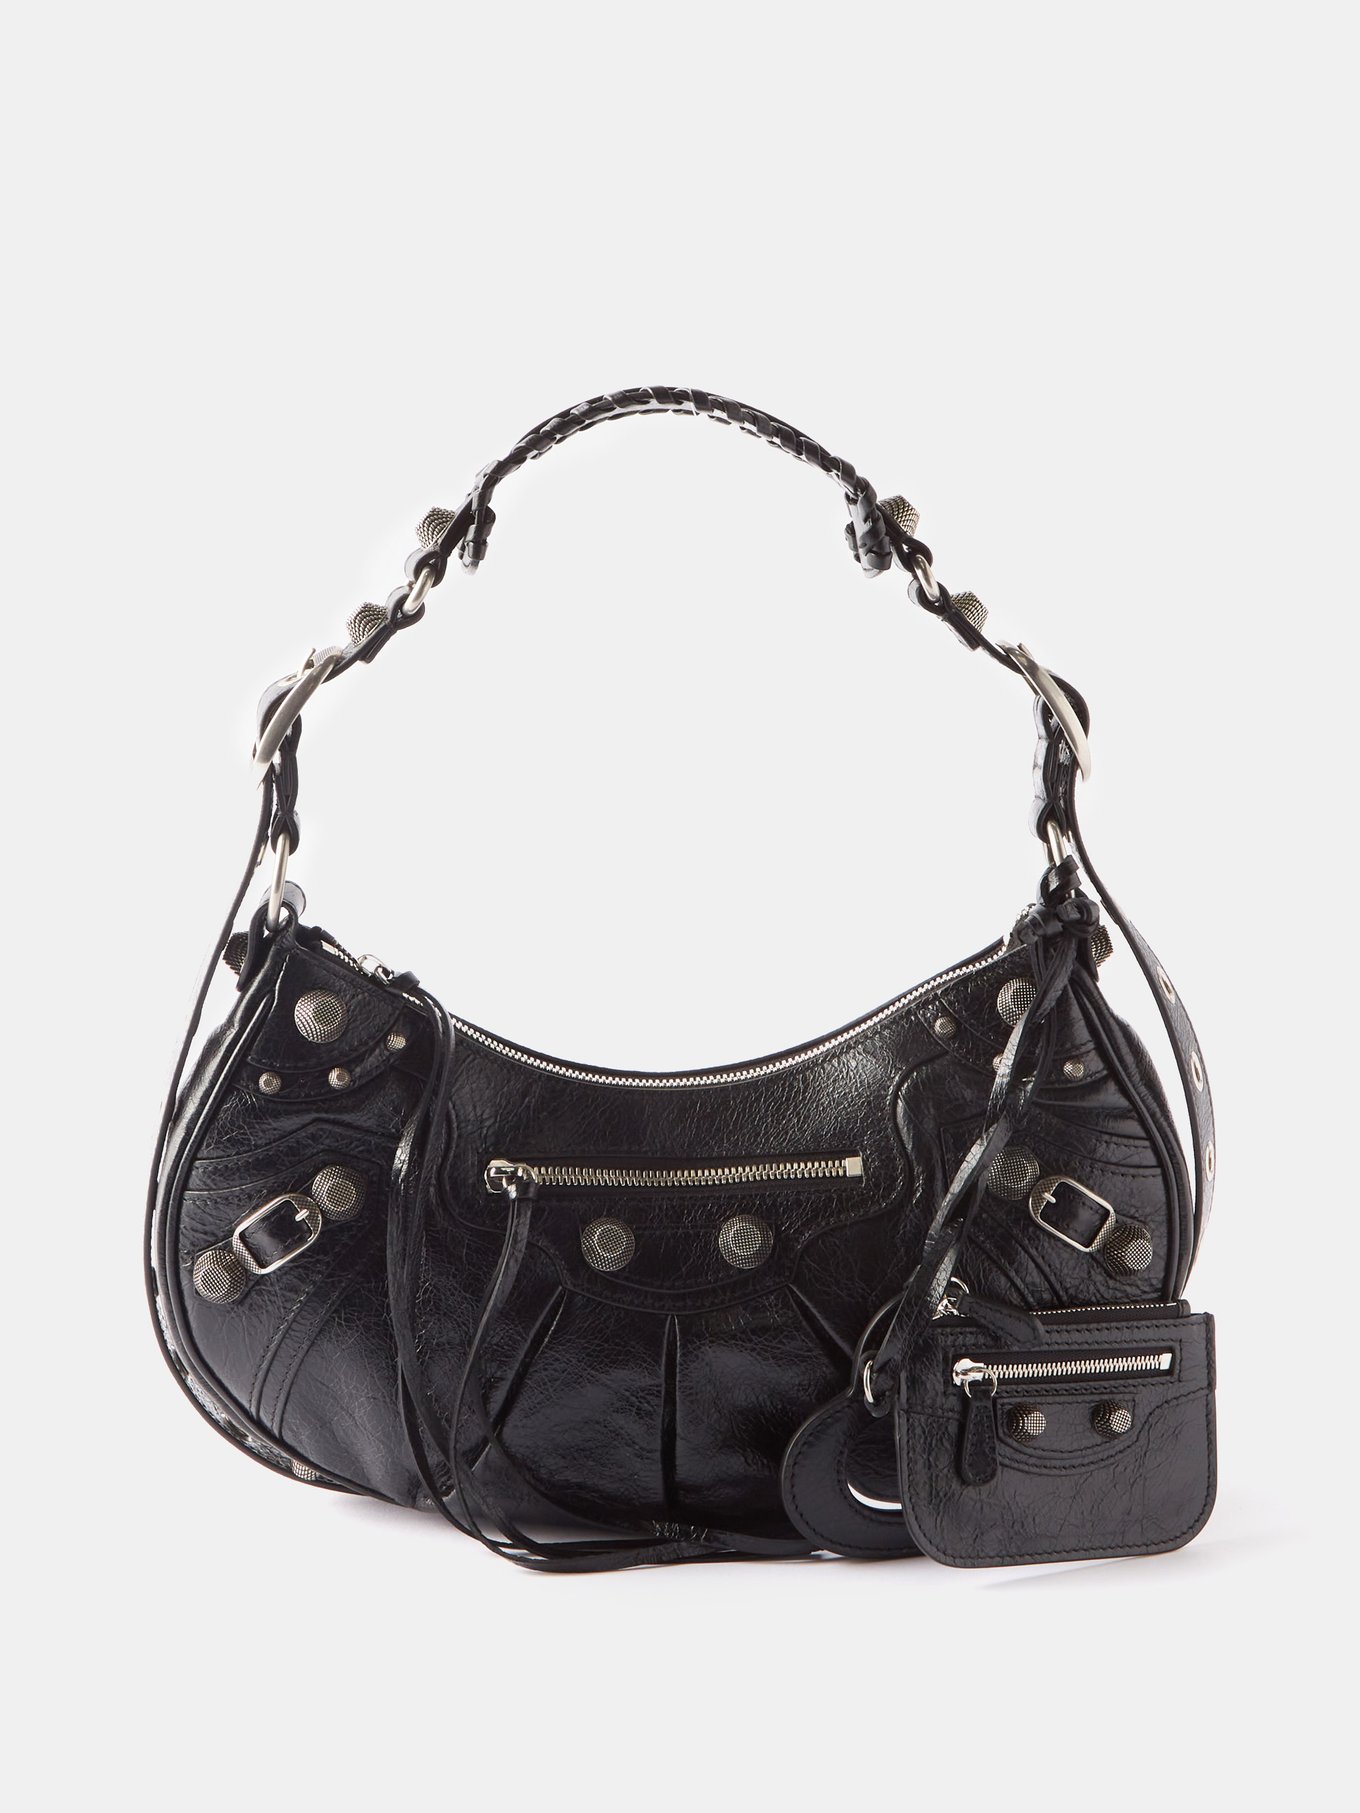 Black Cagole S leather shoulder bag, Balenciaga